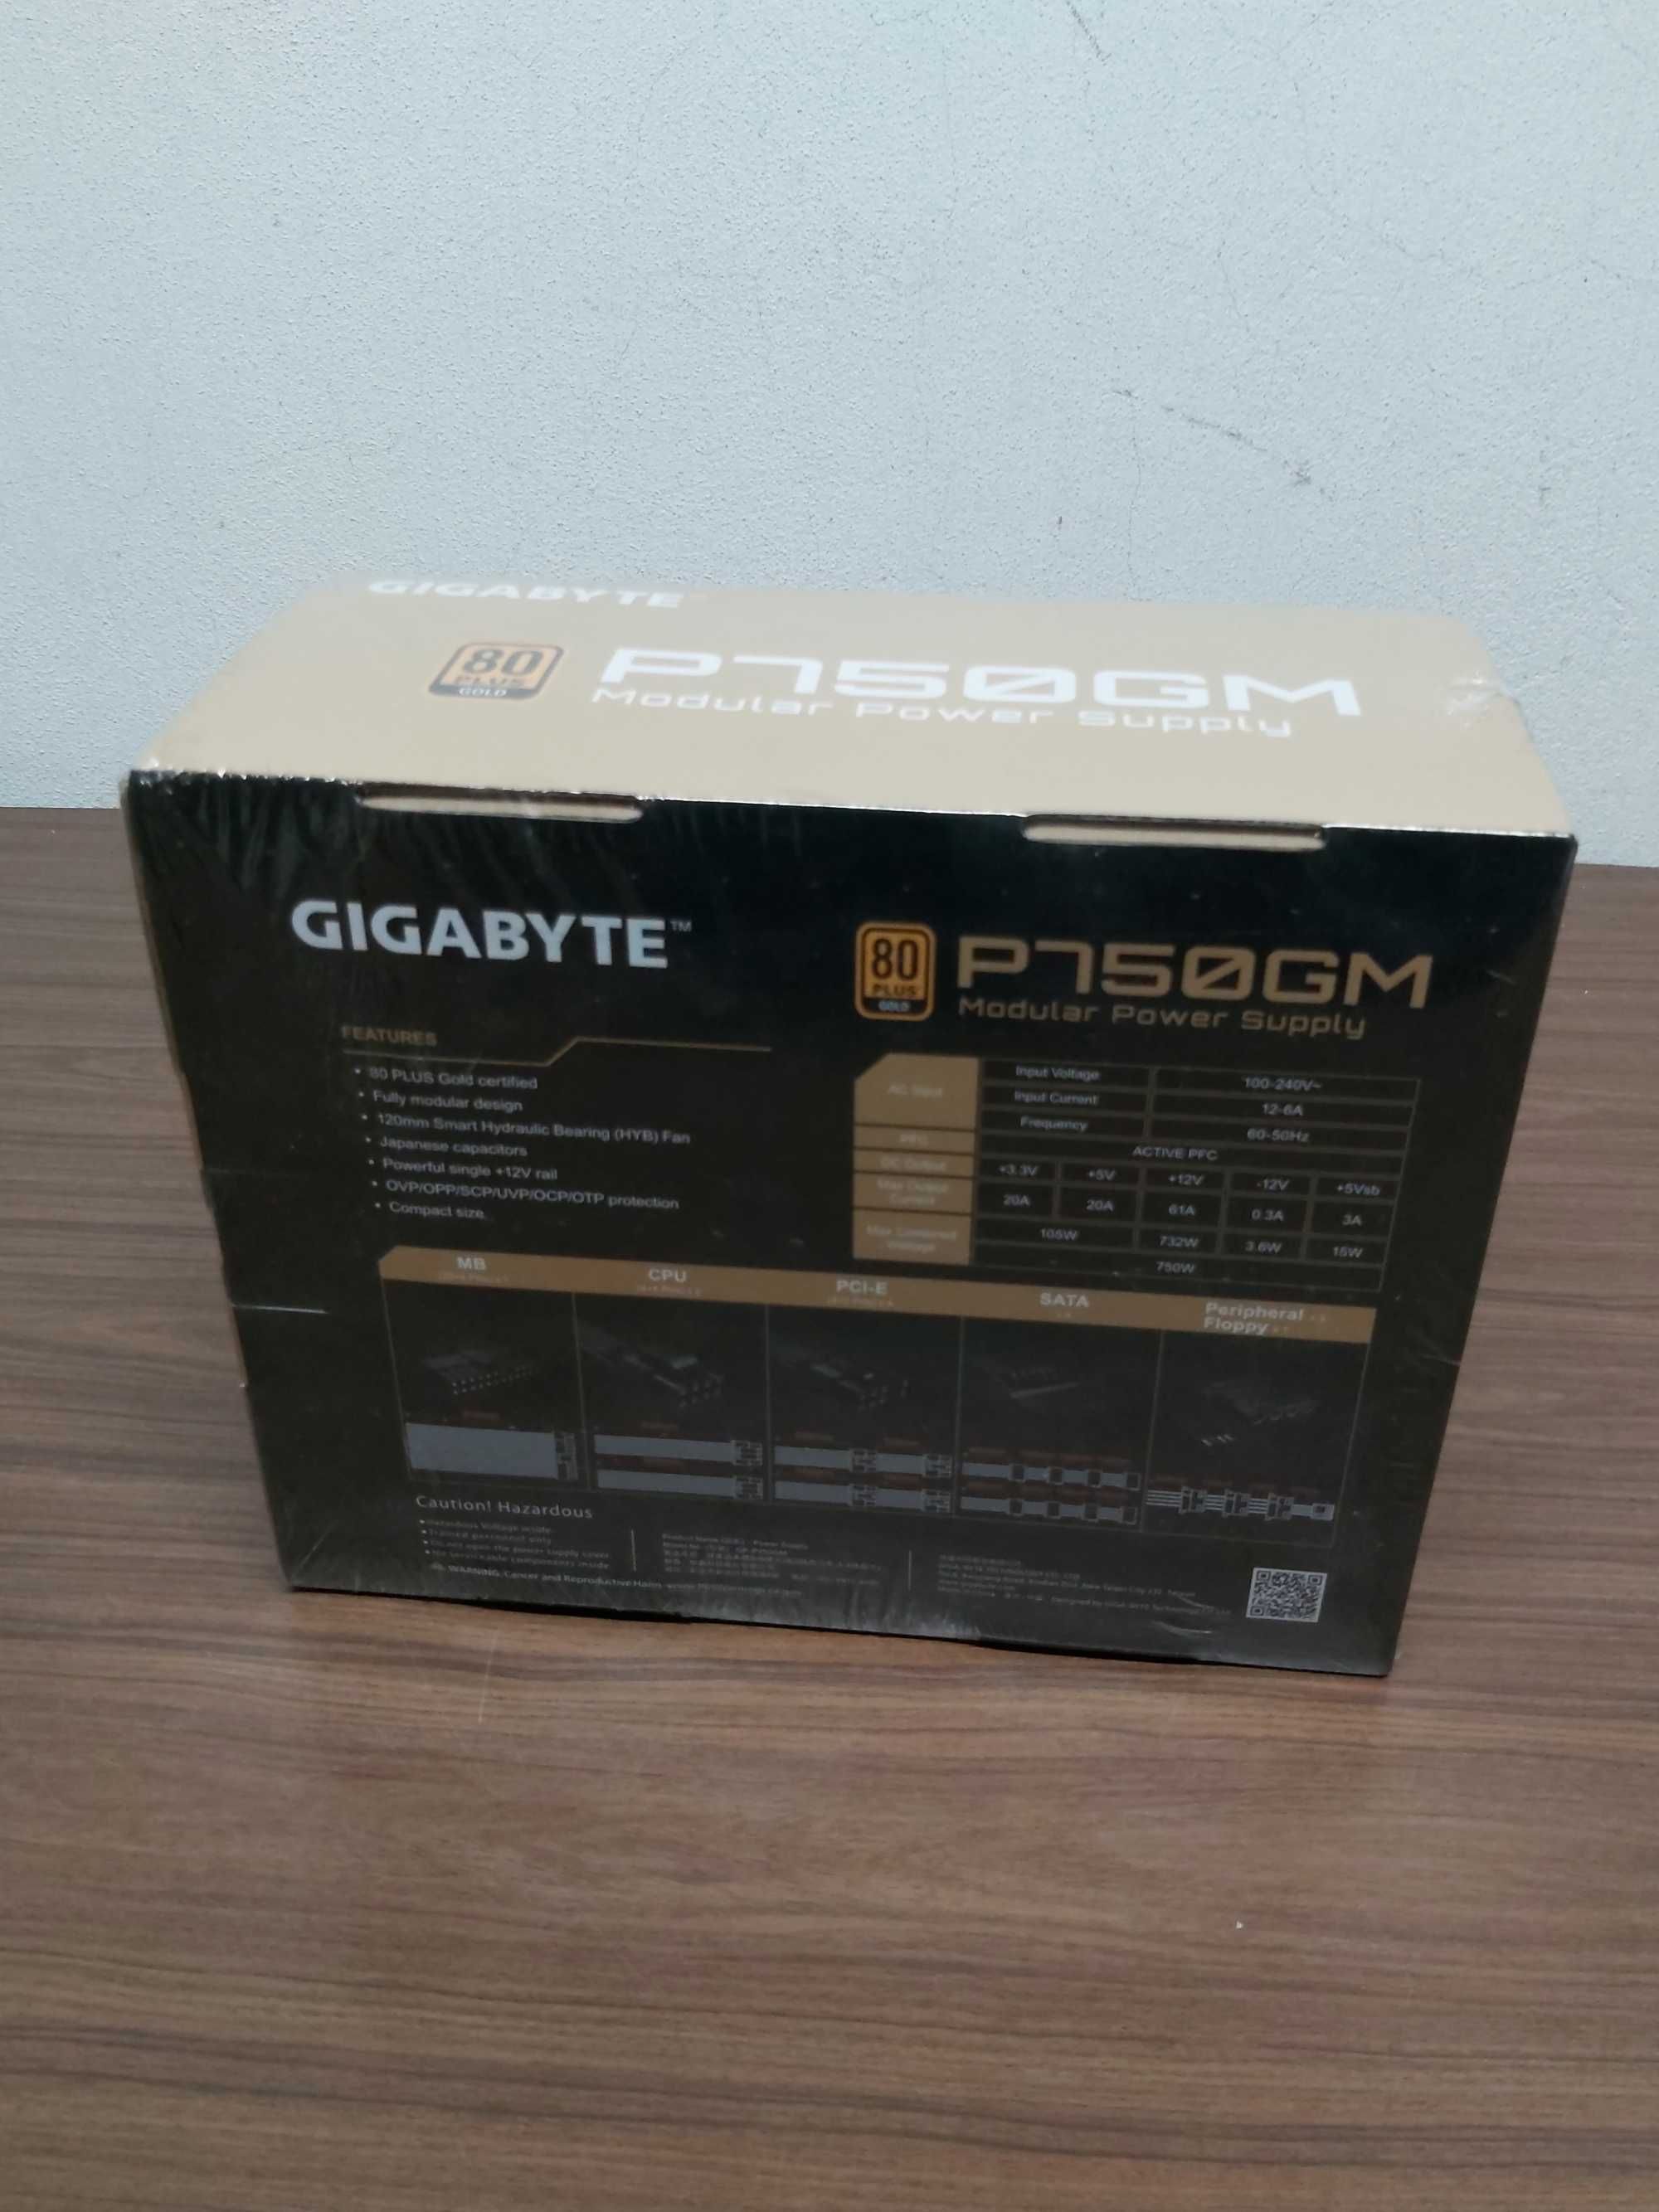 Gigabyte P750GM 750W 80 Plus Gold